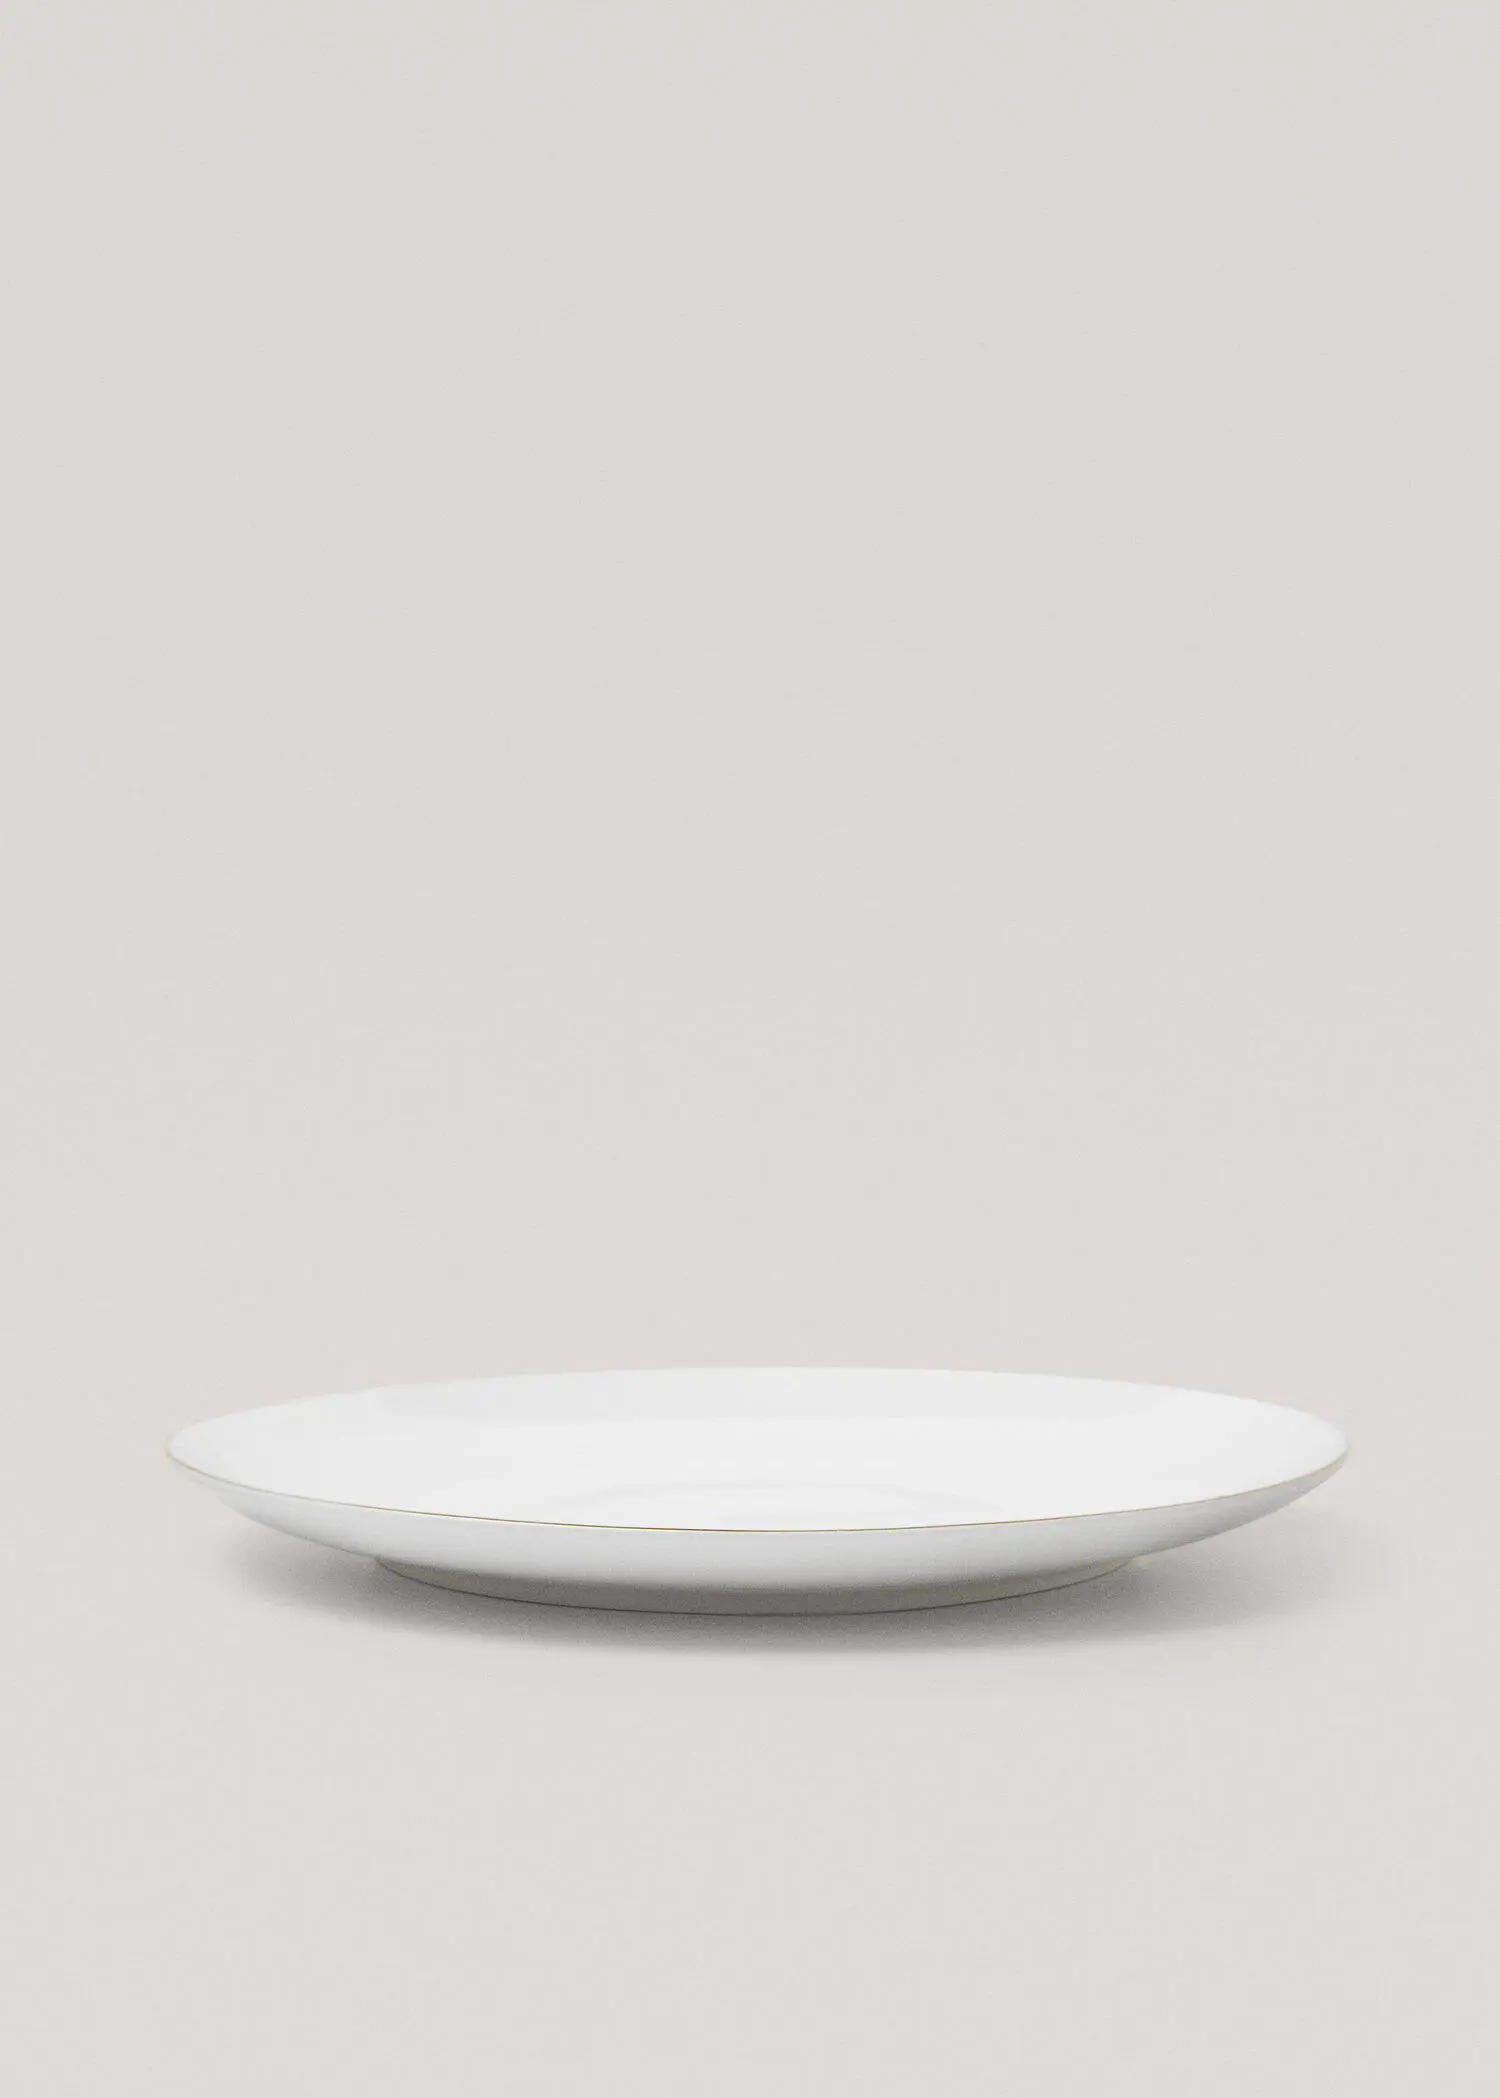 Mango bone china filo dinner plate. 3